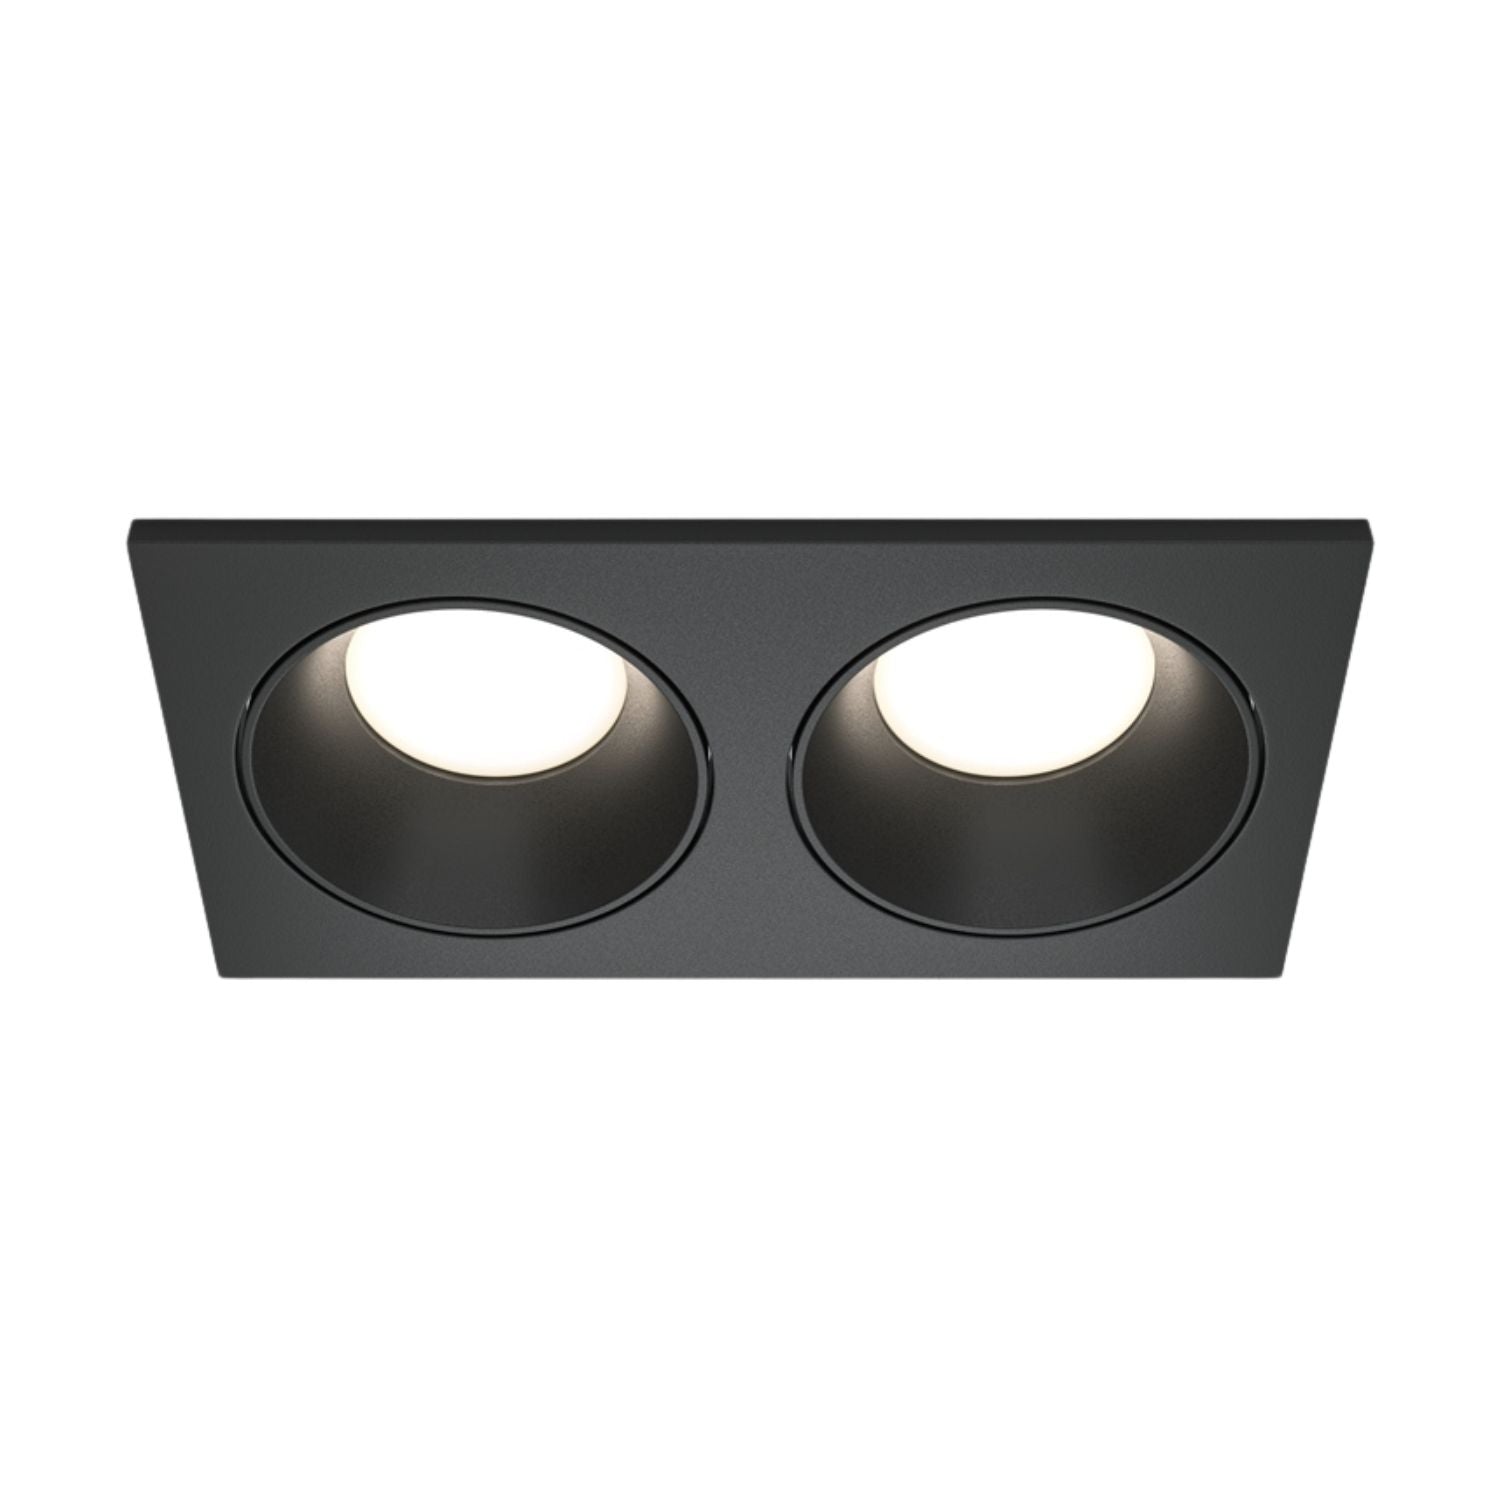 ZOOM - Double recessed spotlight in black or white IP65 steel